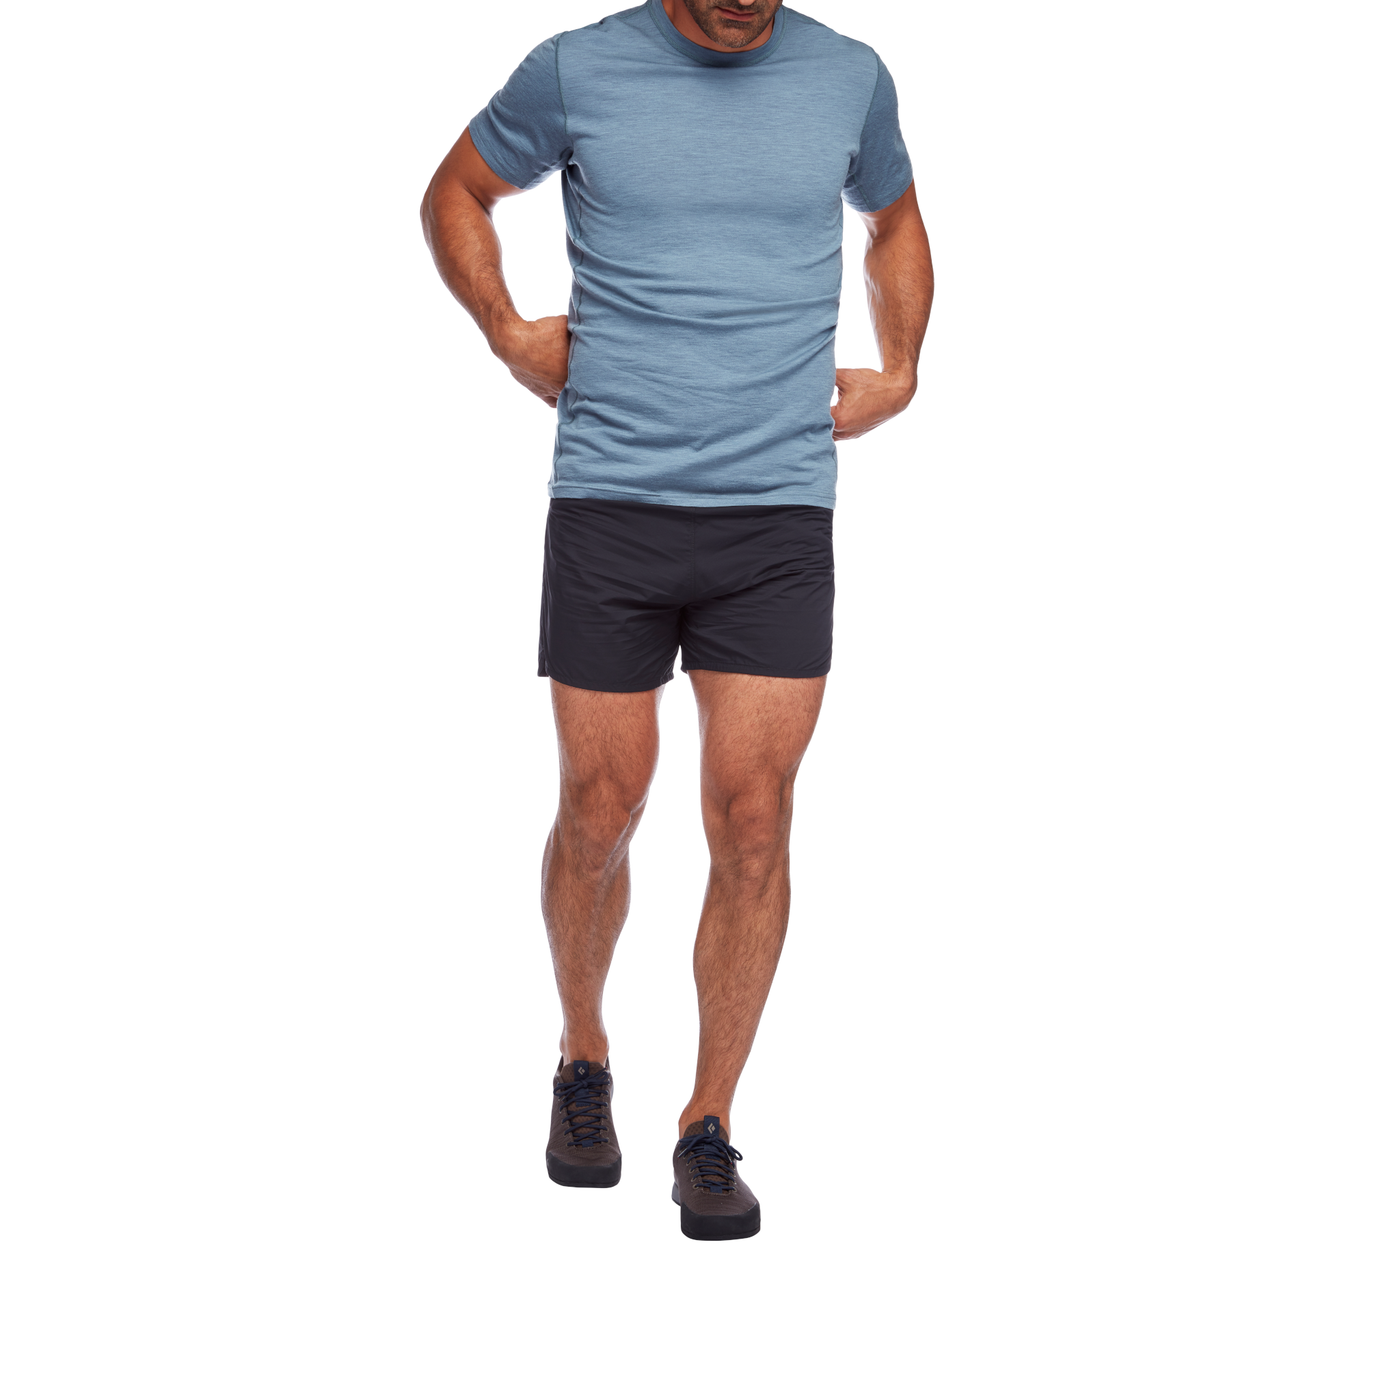 Sprint Shorts - Men's